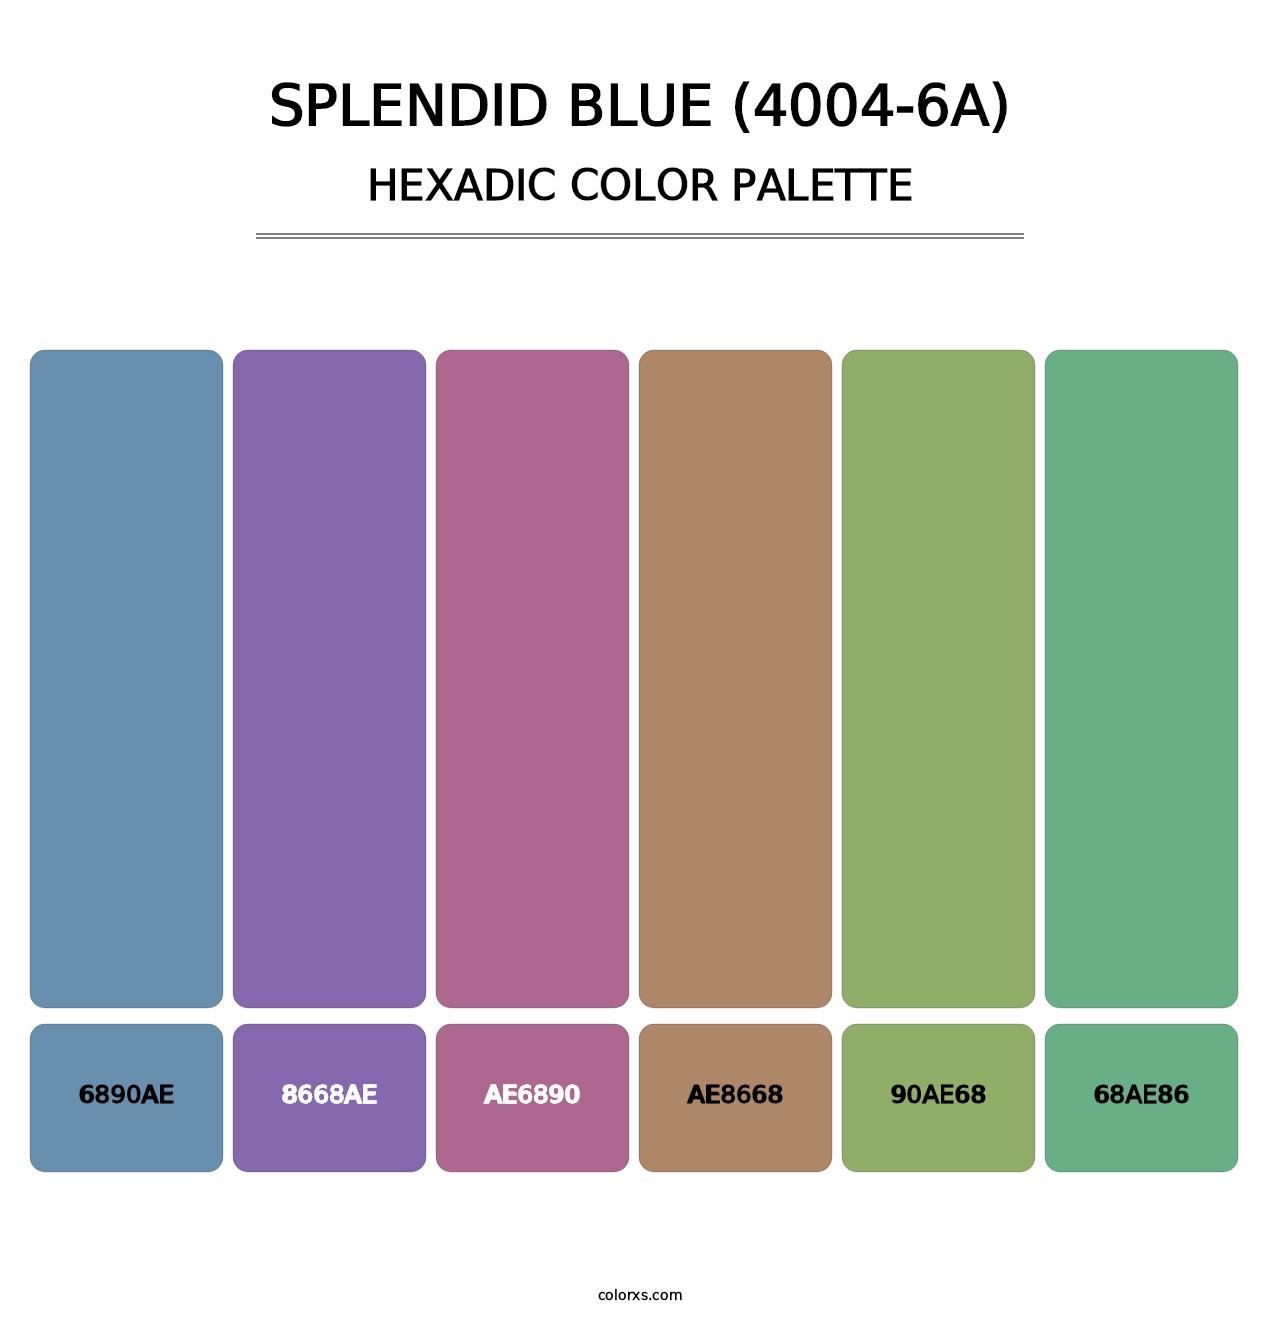 Splendid Blue (4004-6A) - Hexadic Color Palette